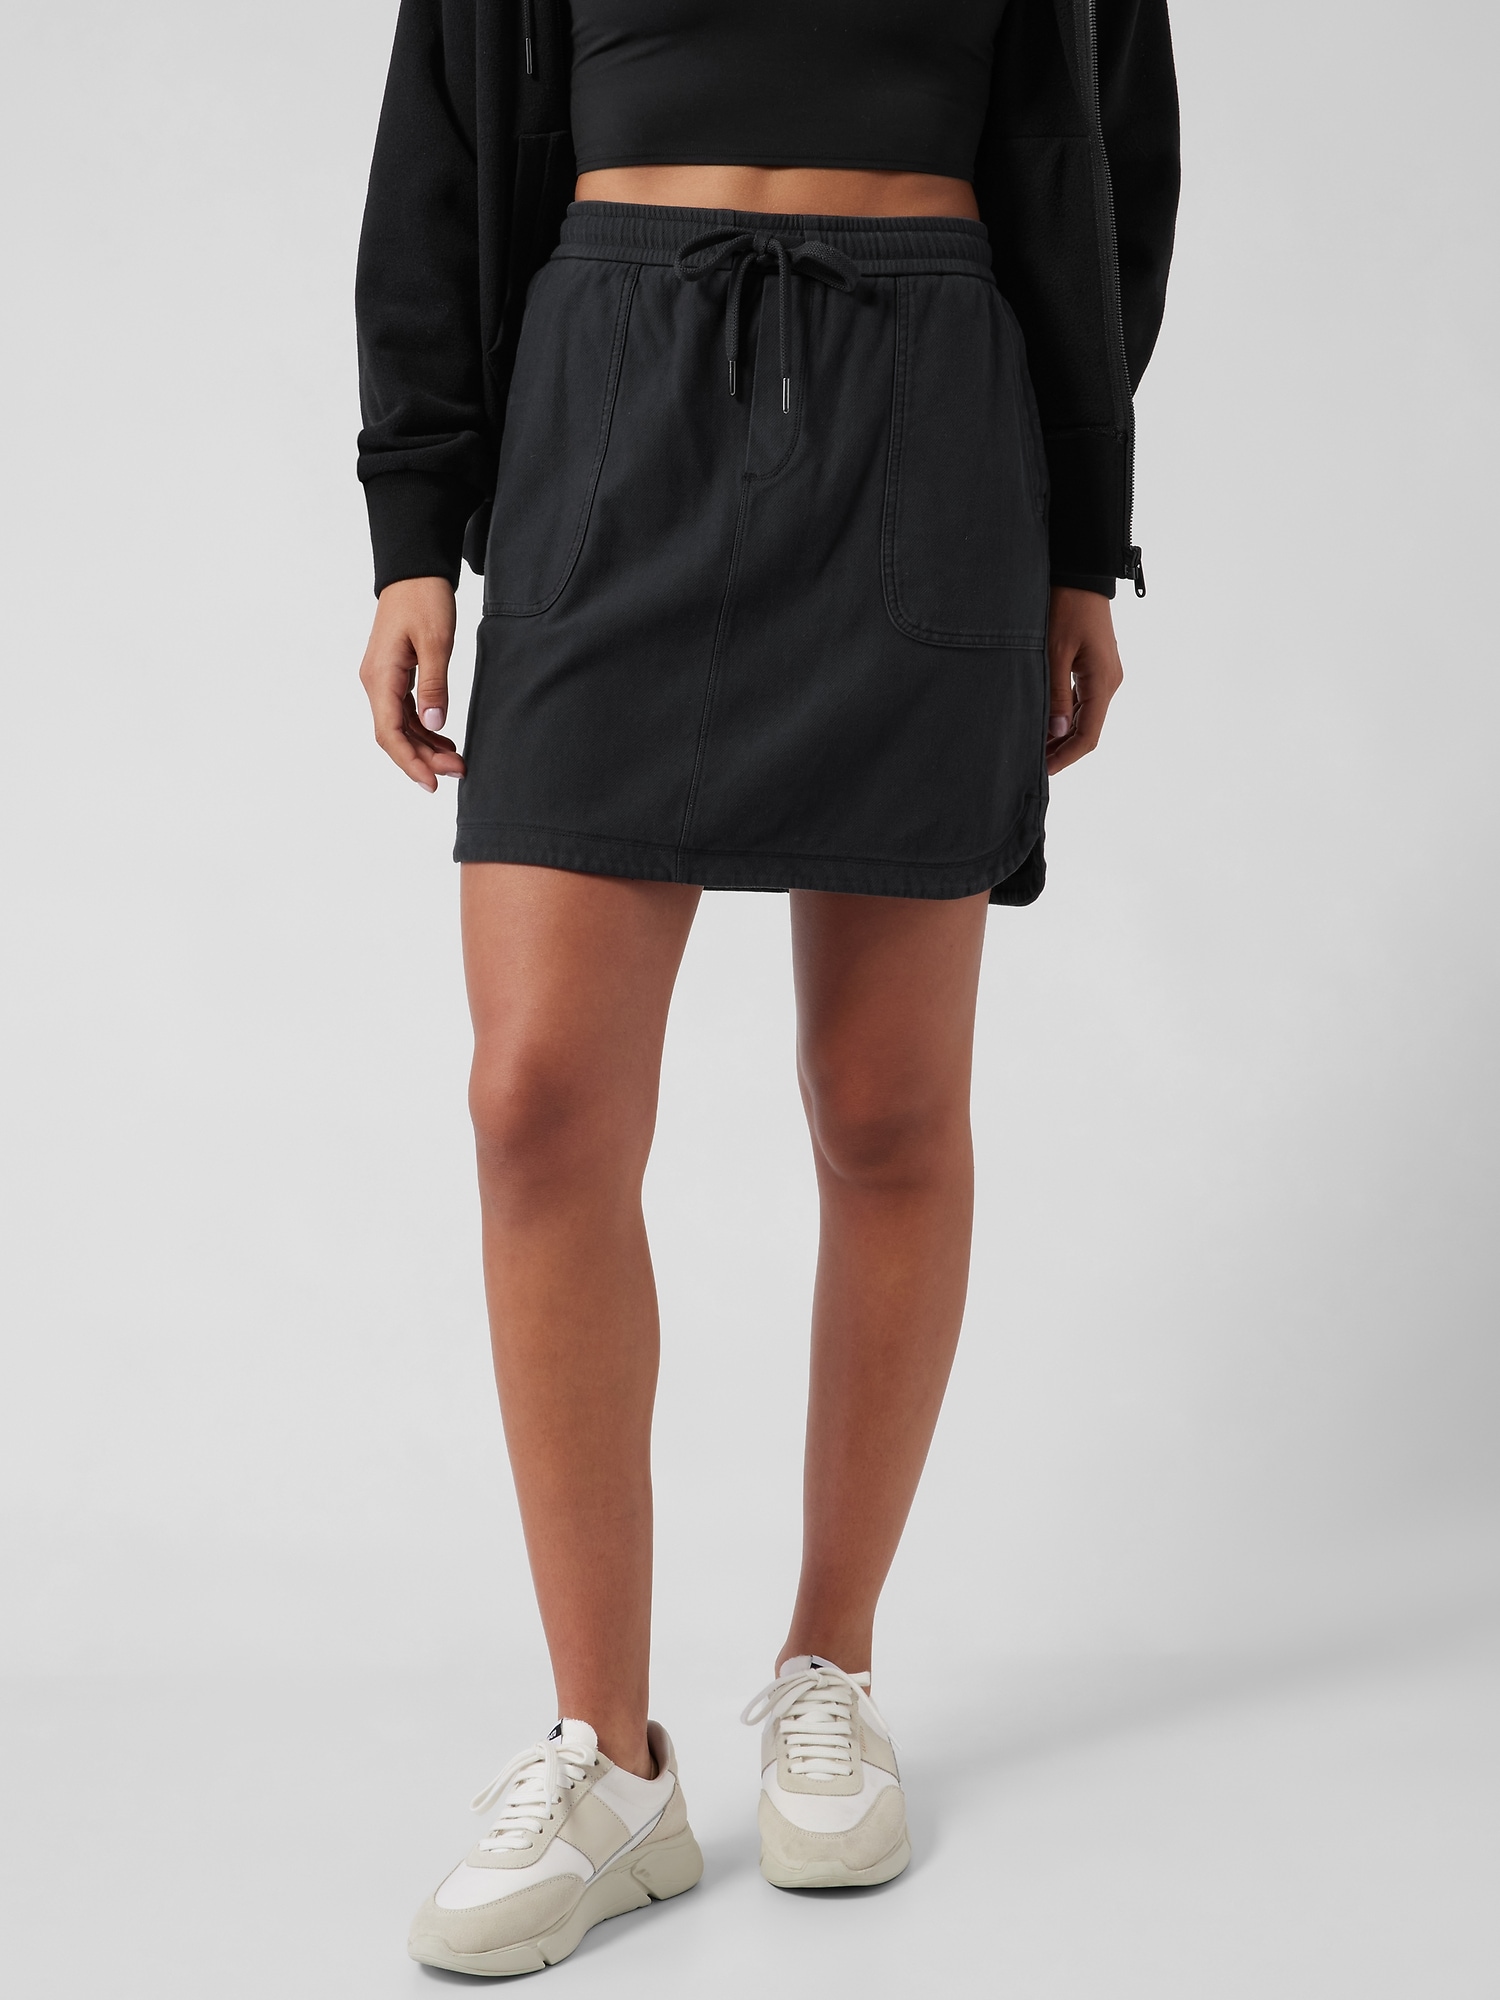 Farallon Skirt